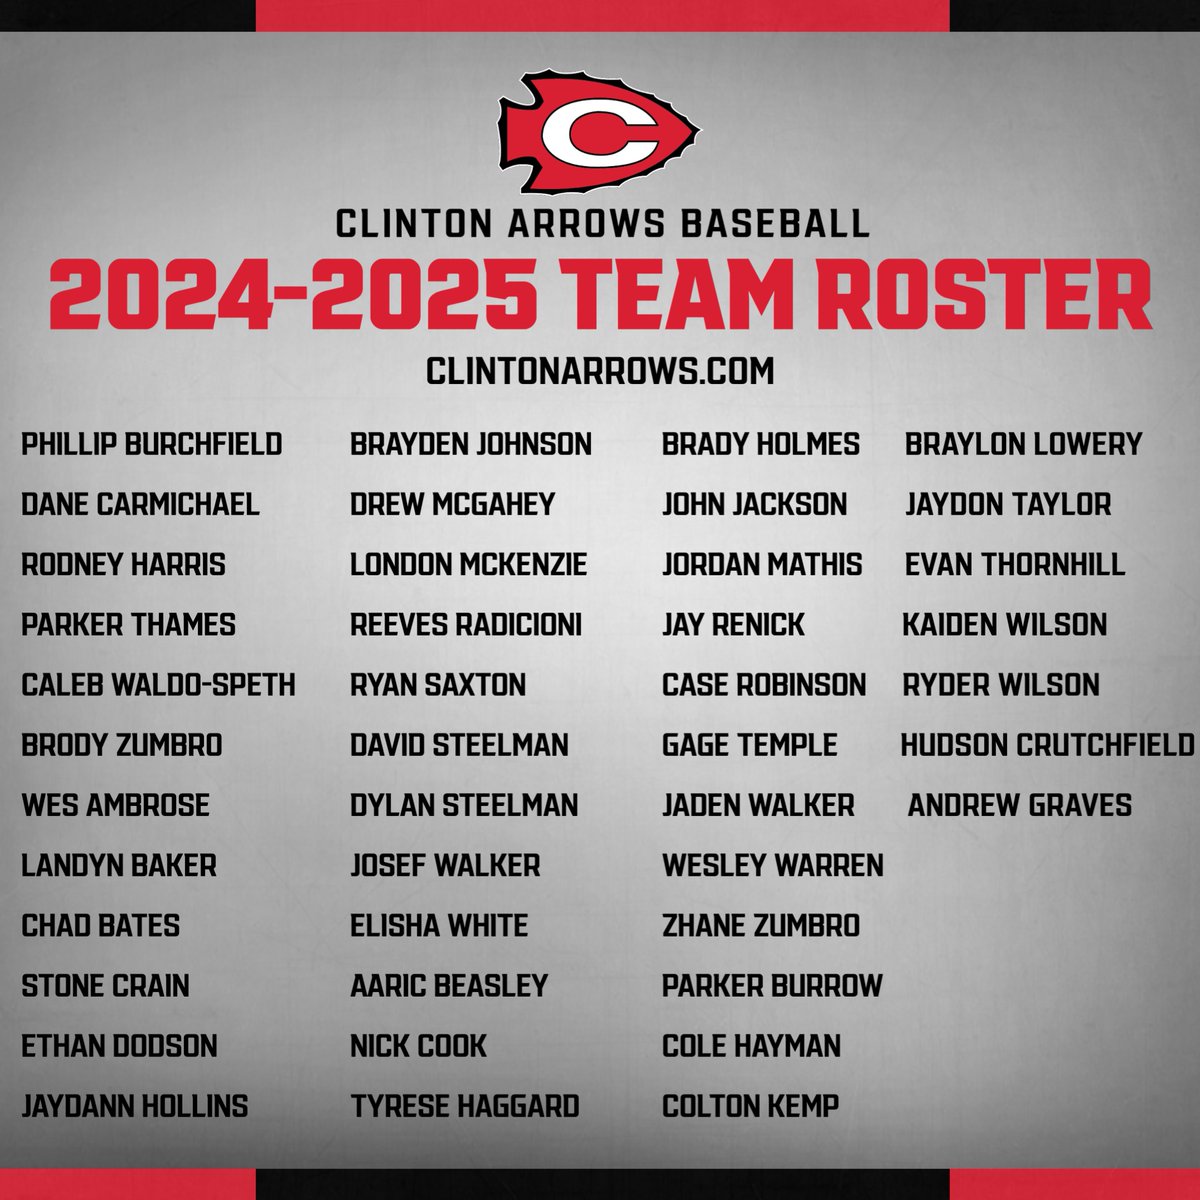 Clinton Arrows Baseball has announced their roster for the 2024-2025 season @ArrowBaseball @ClintonSchools